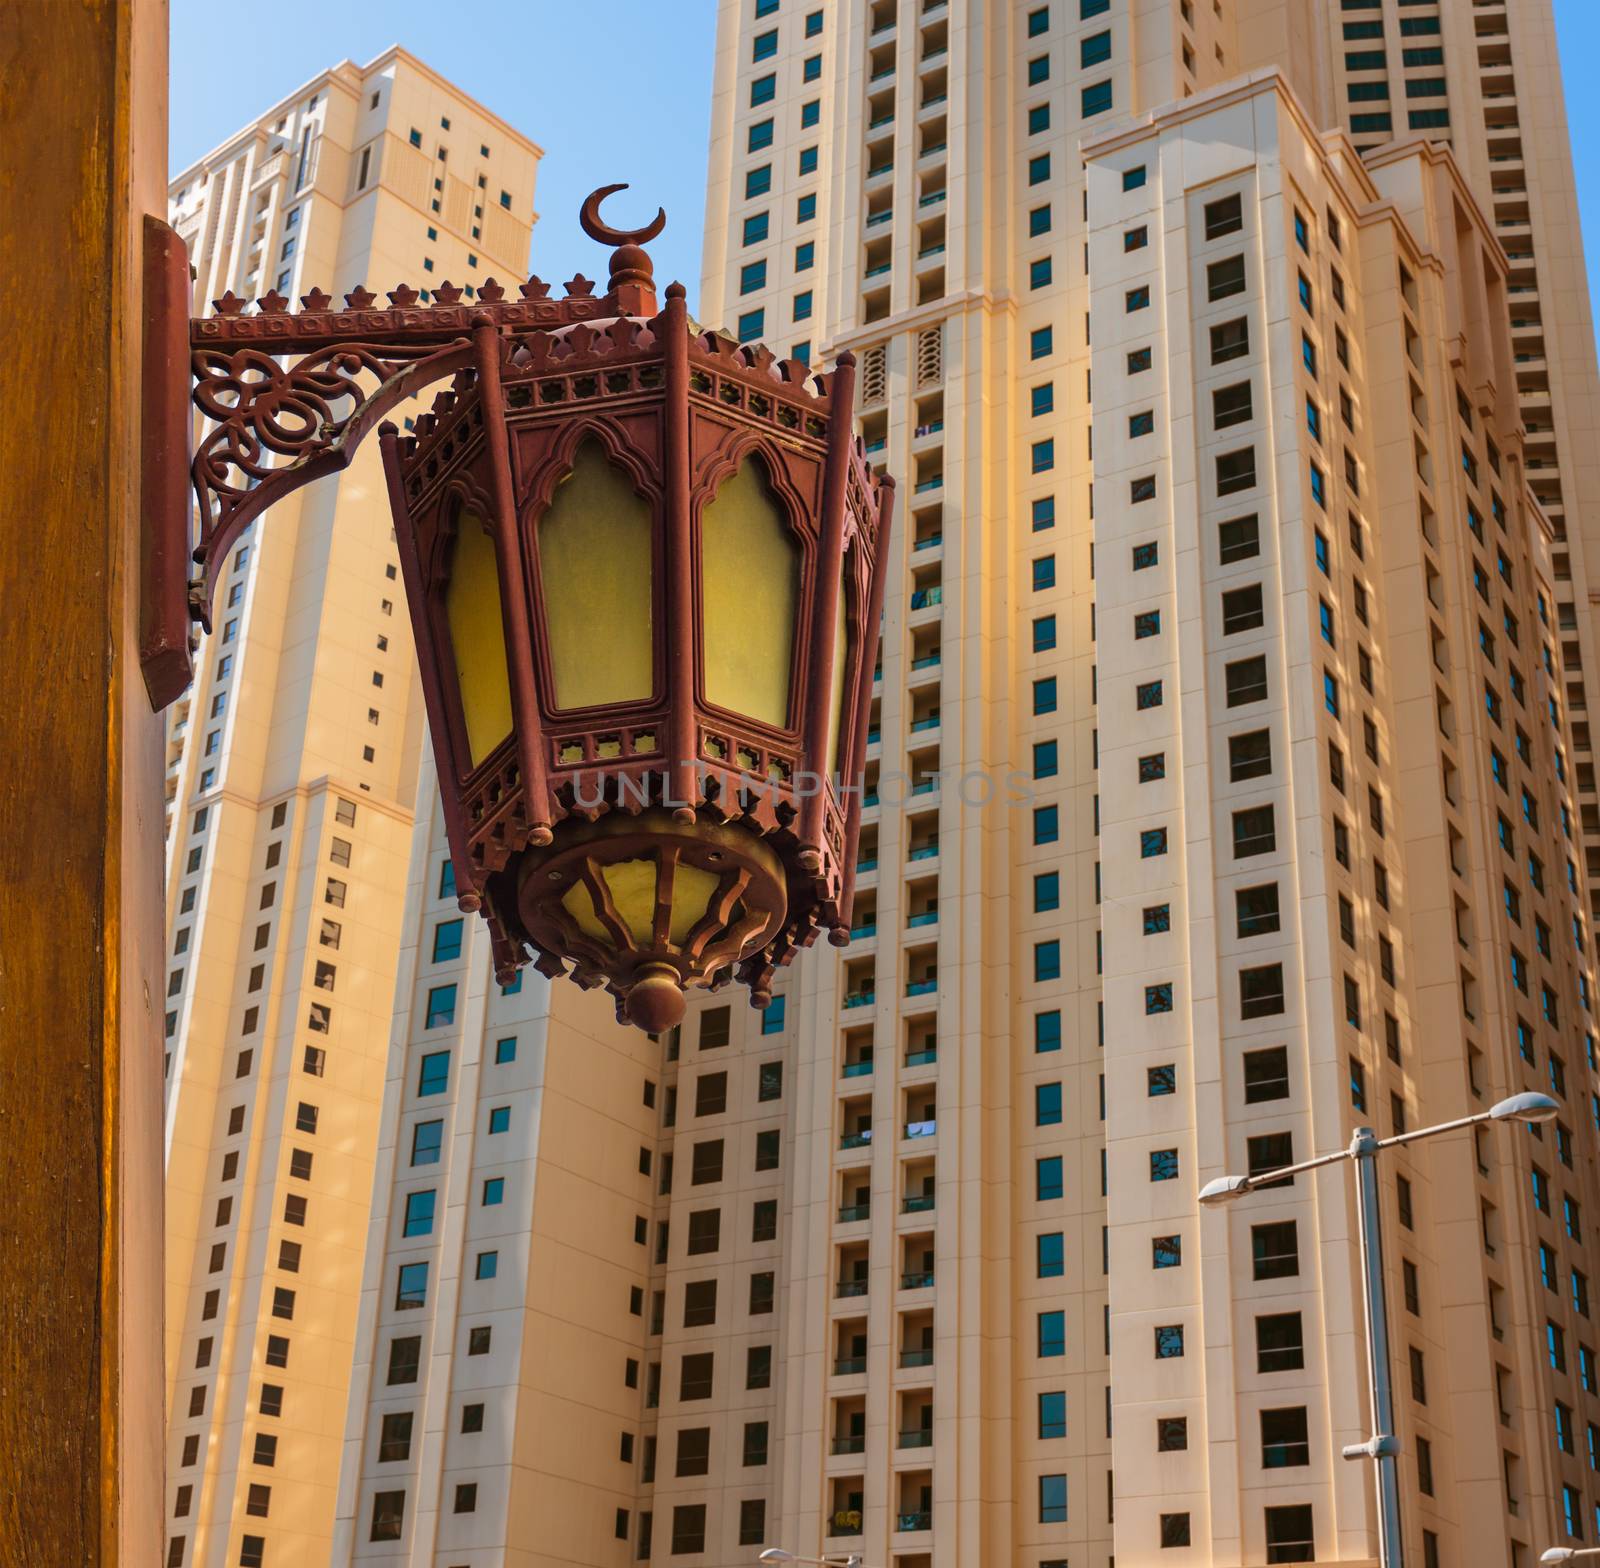  High rise buildings and streets in Dubai, UAE by oleg_zhukov